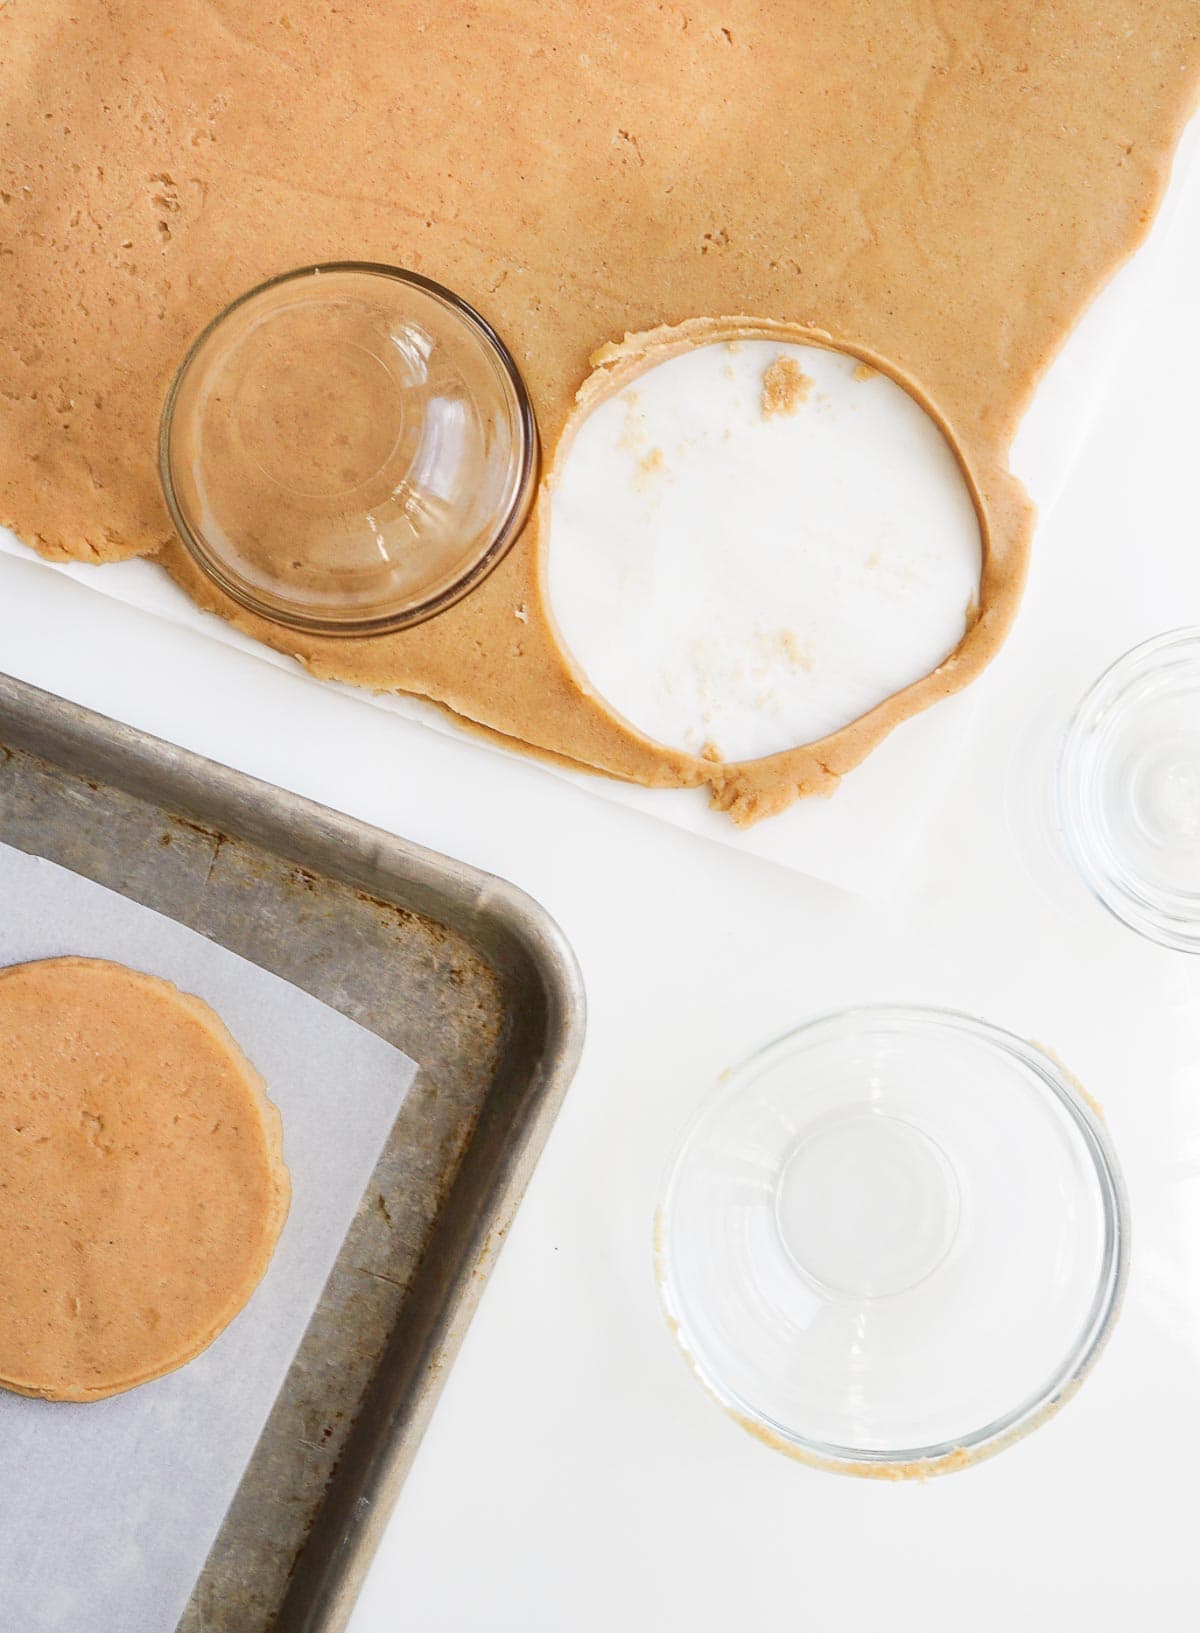 Edible DIY Layered Cookie Cake by Sugar & Cloth, an award winning DIY inspired lifestyle blog.